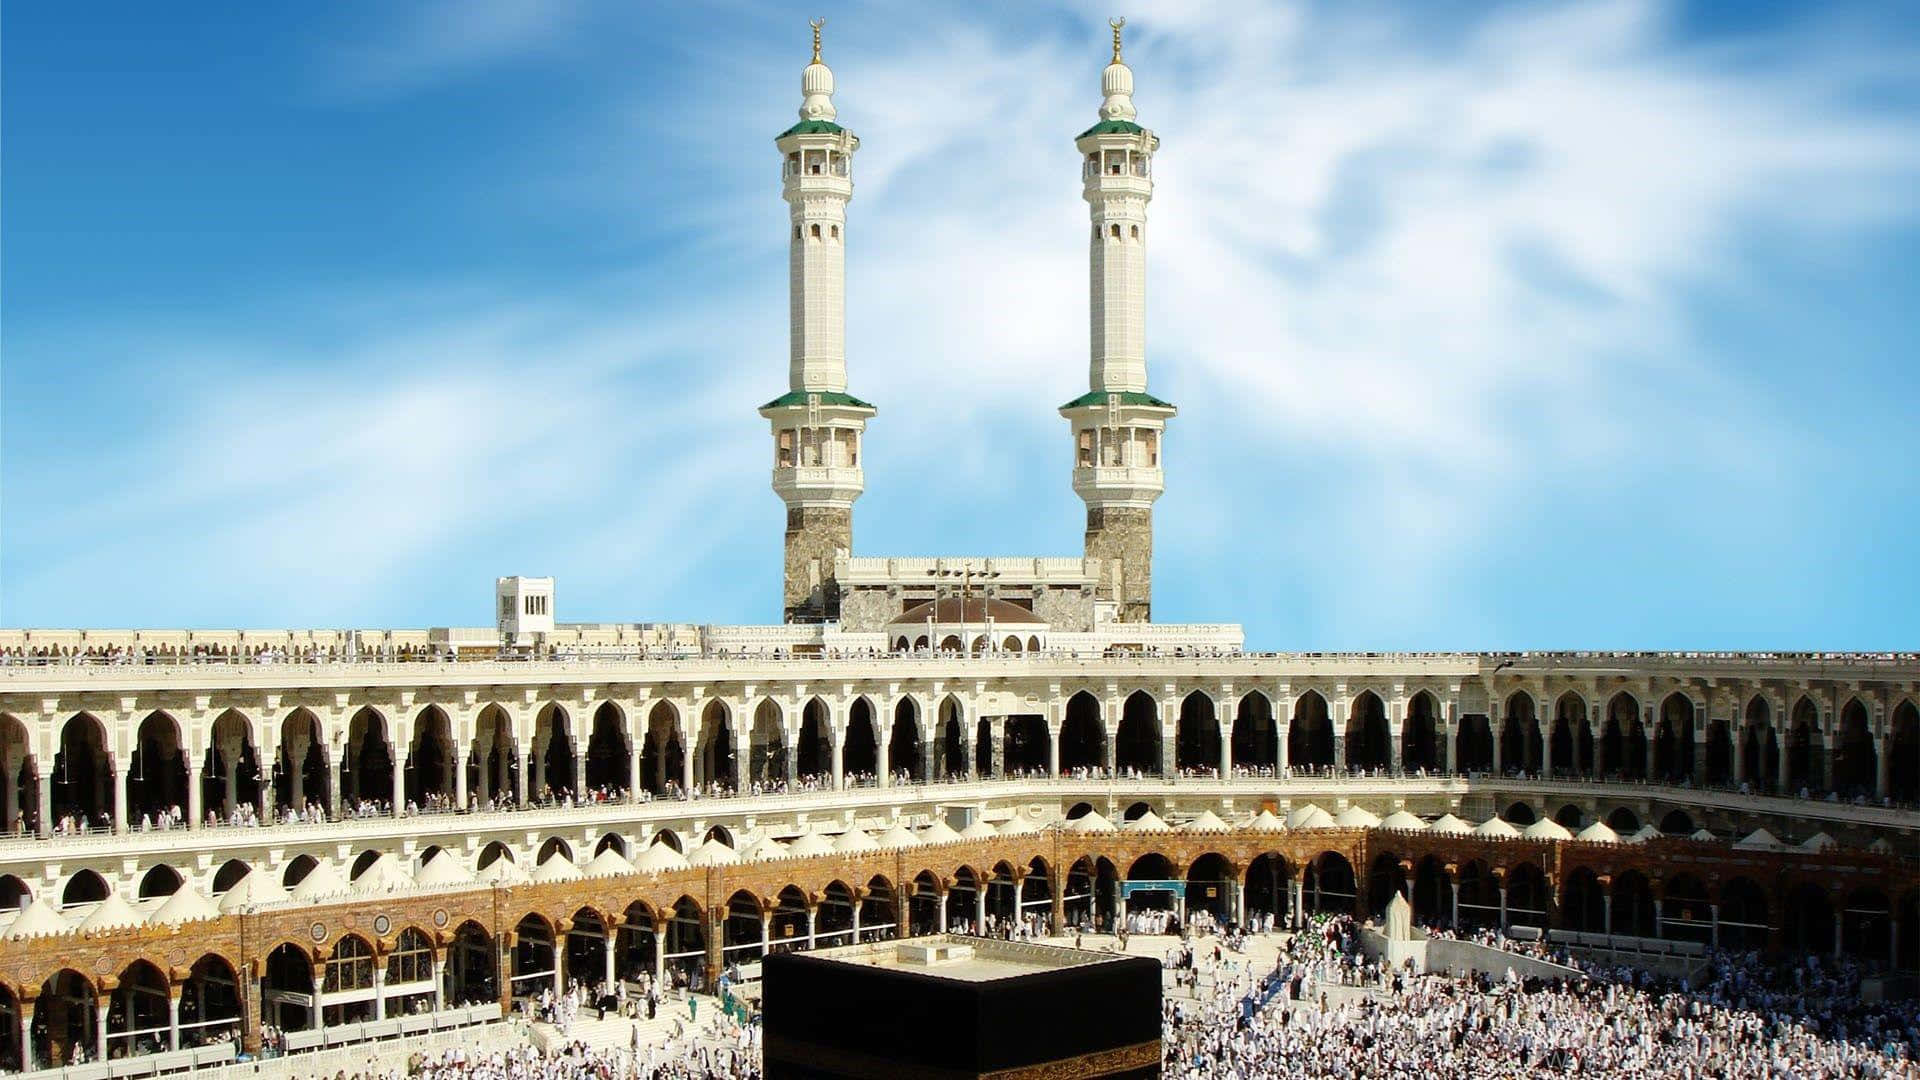 The Kaaba in Mecca, Saudi Arabia, the holiest site in Islam